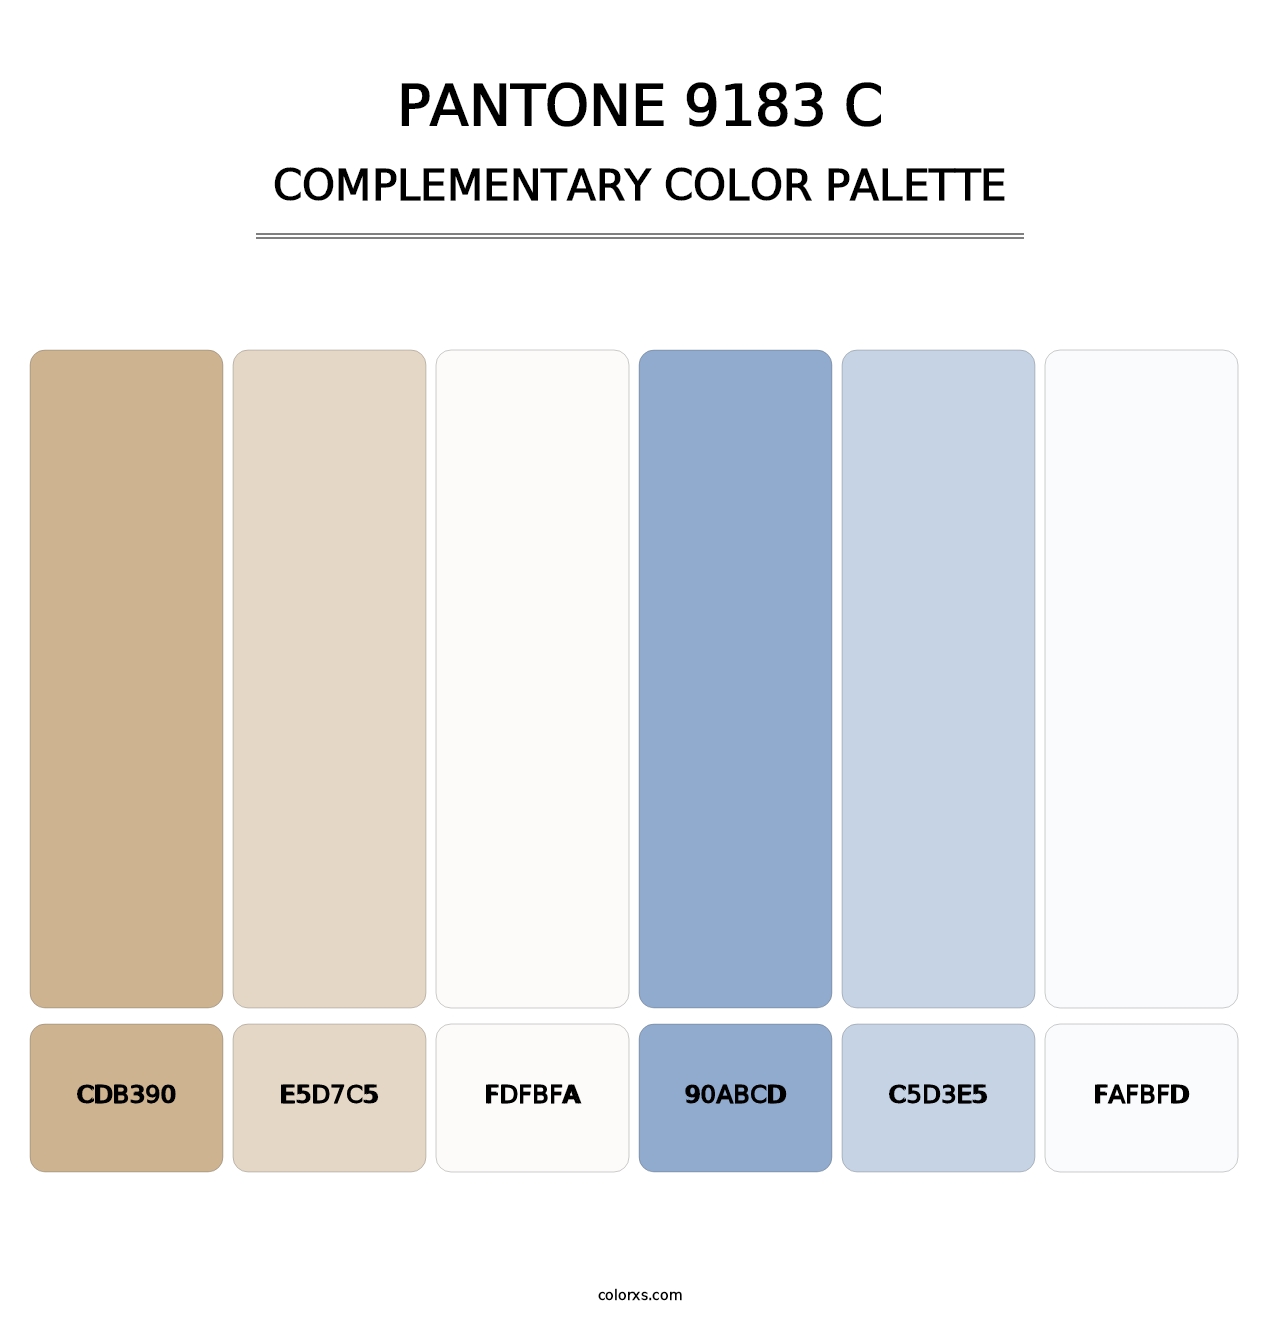 PANTONE 9183 C - Complementary Color Palette